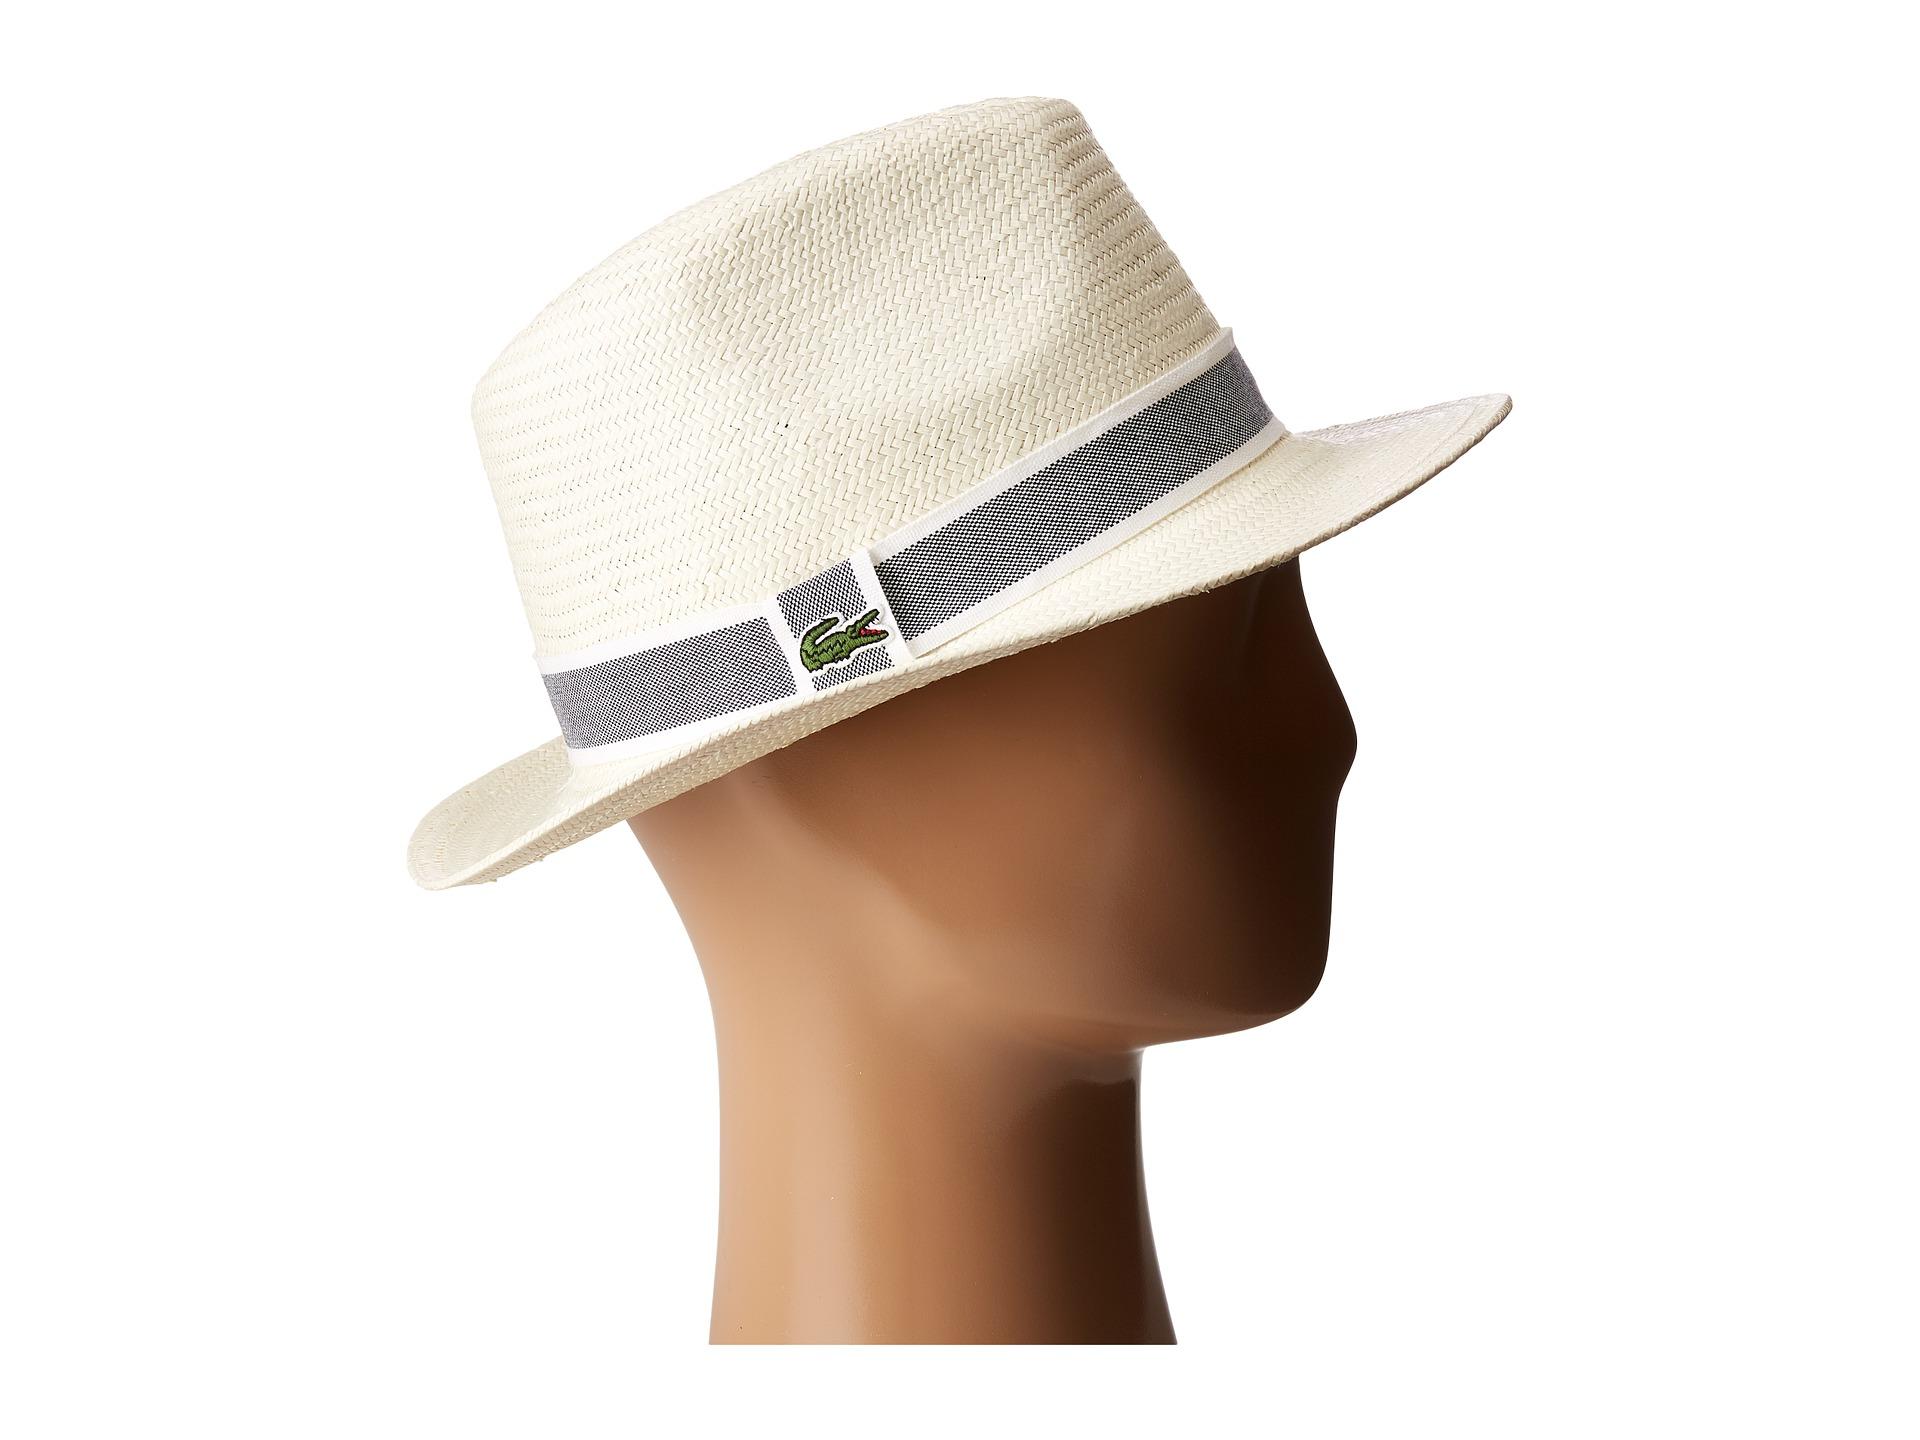 Lacoste Woven Straw Hat for Men - Lyst